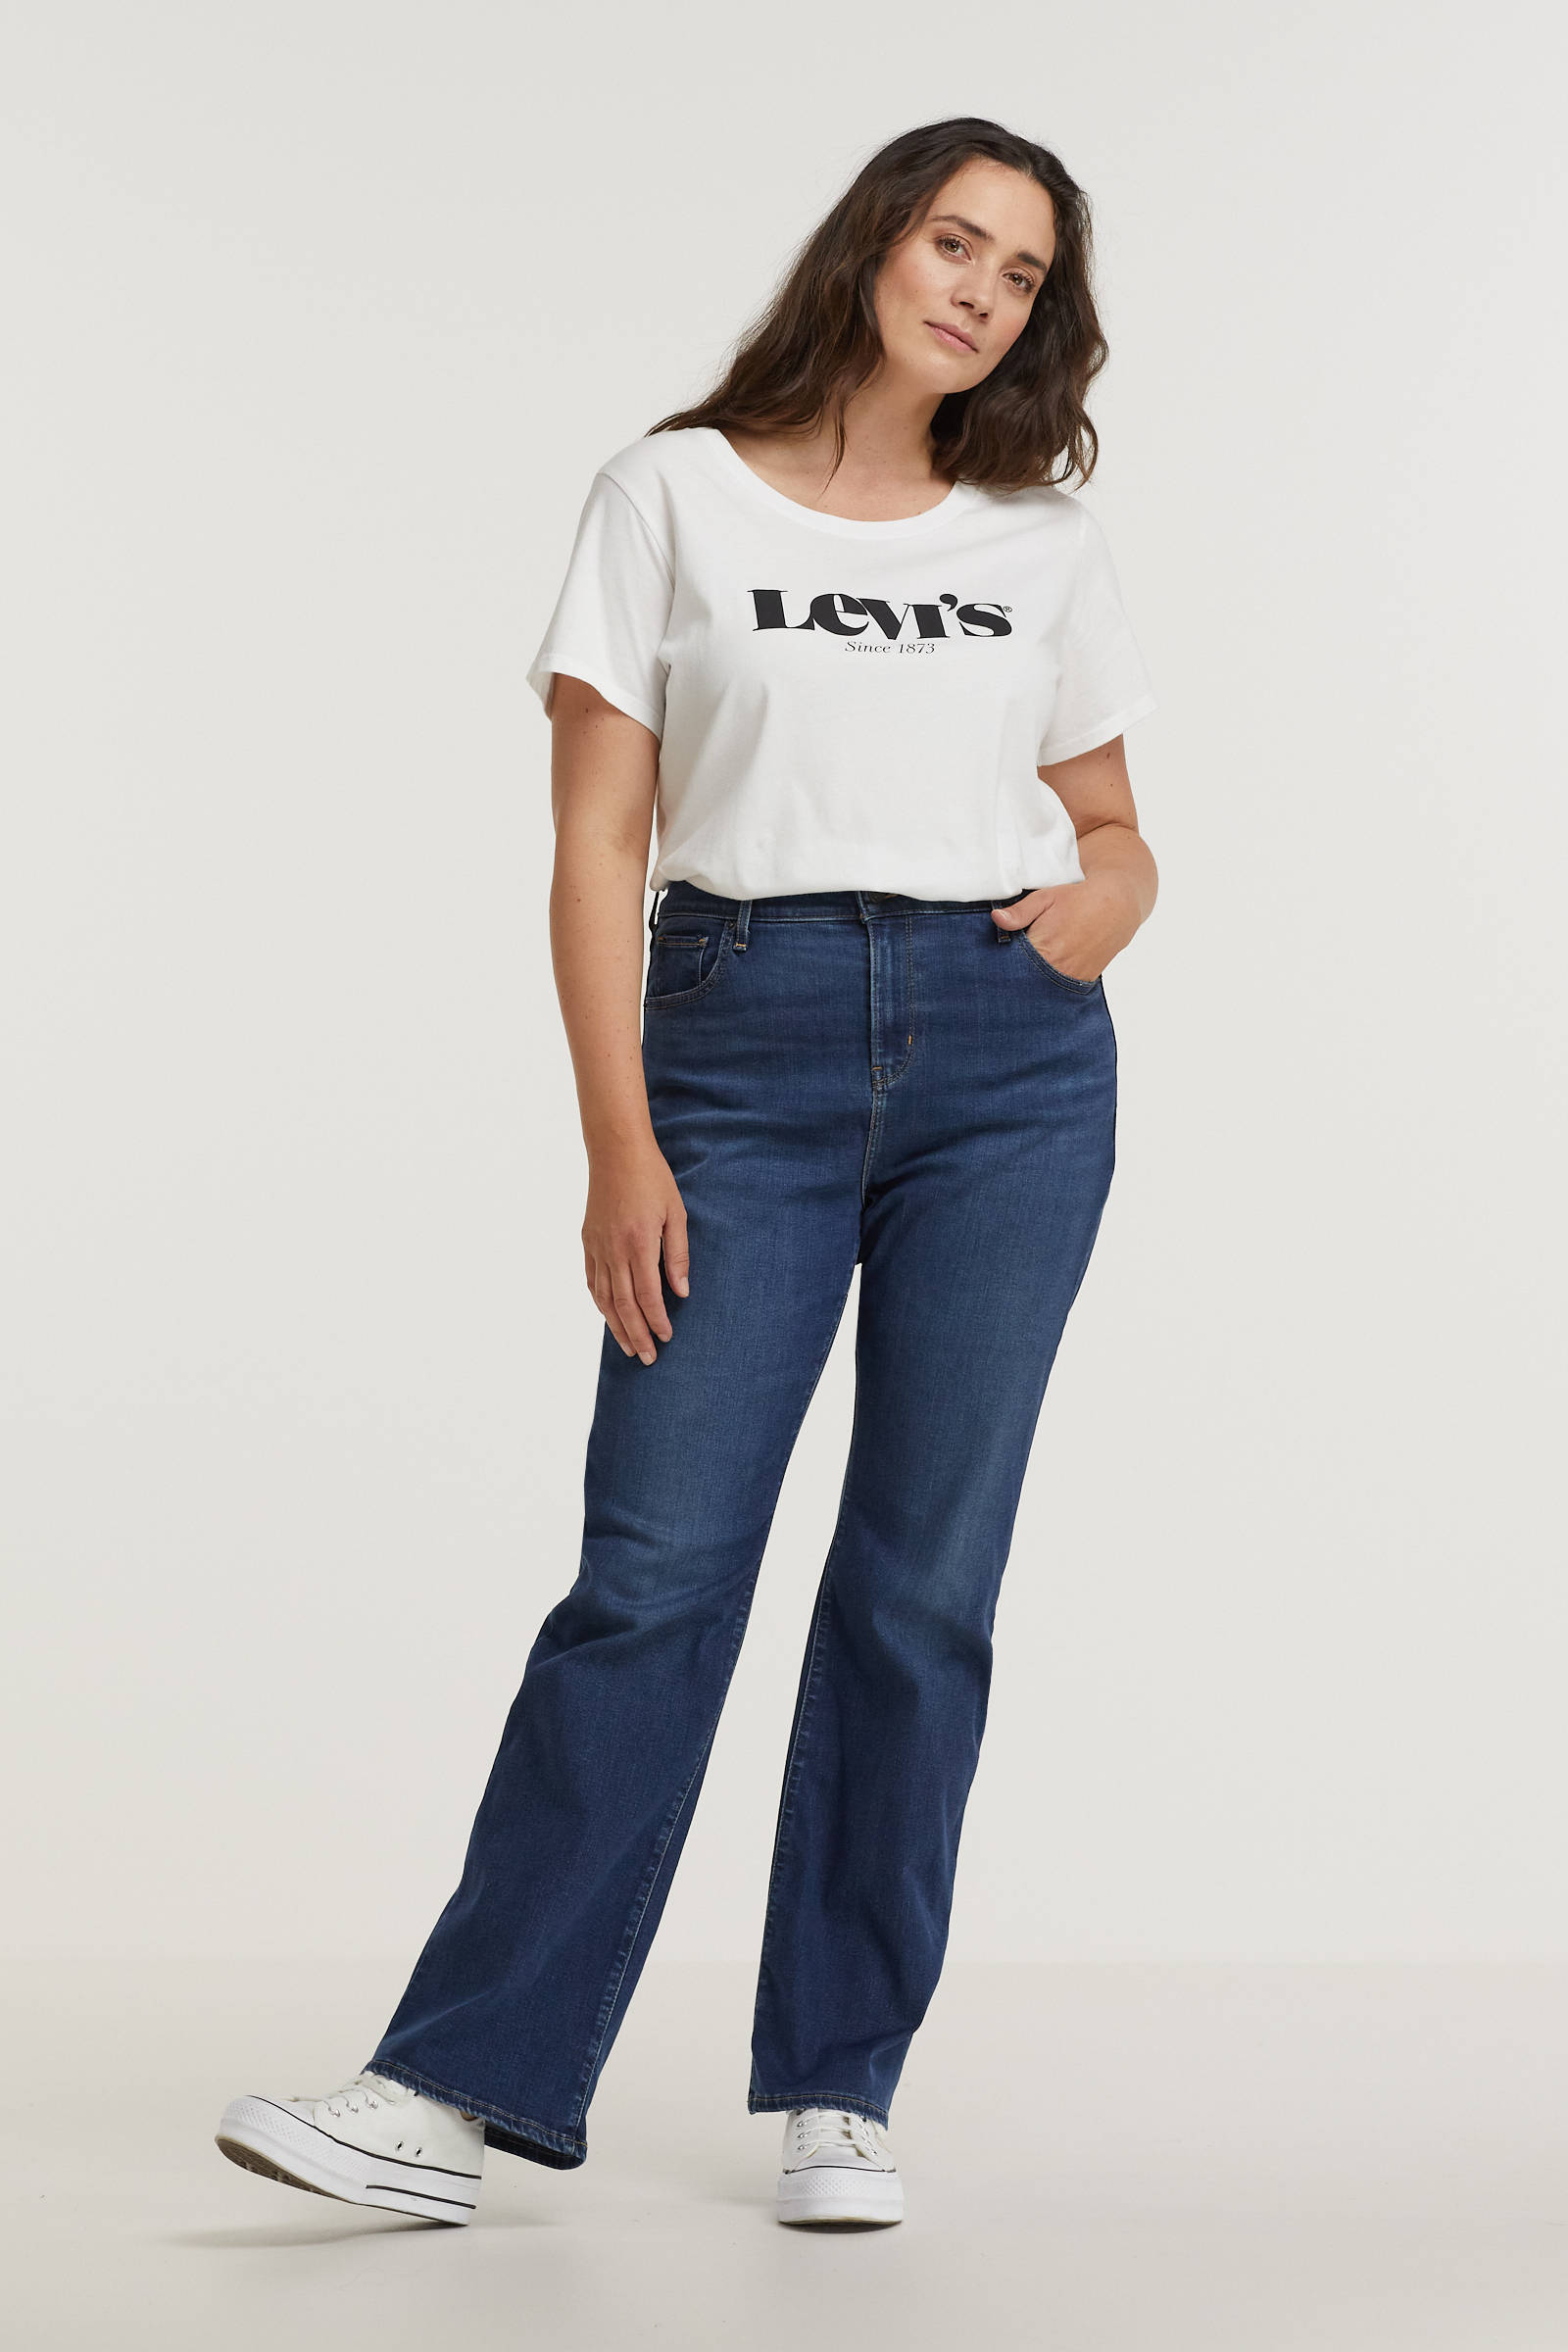 Levi's Plus 725 high waist bootcut jeans bogota shake